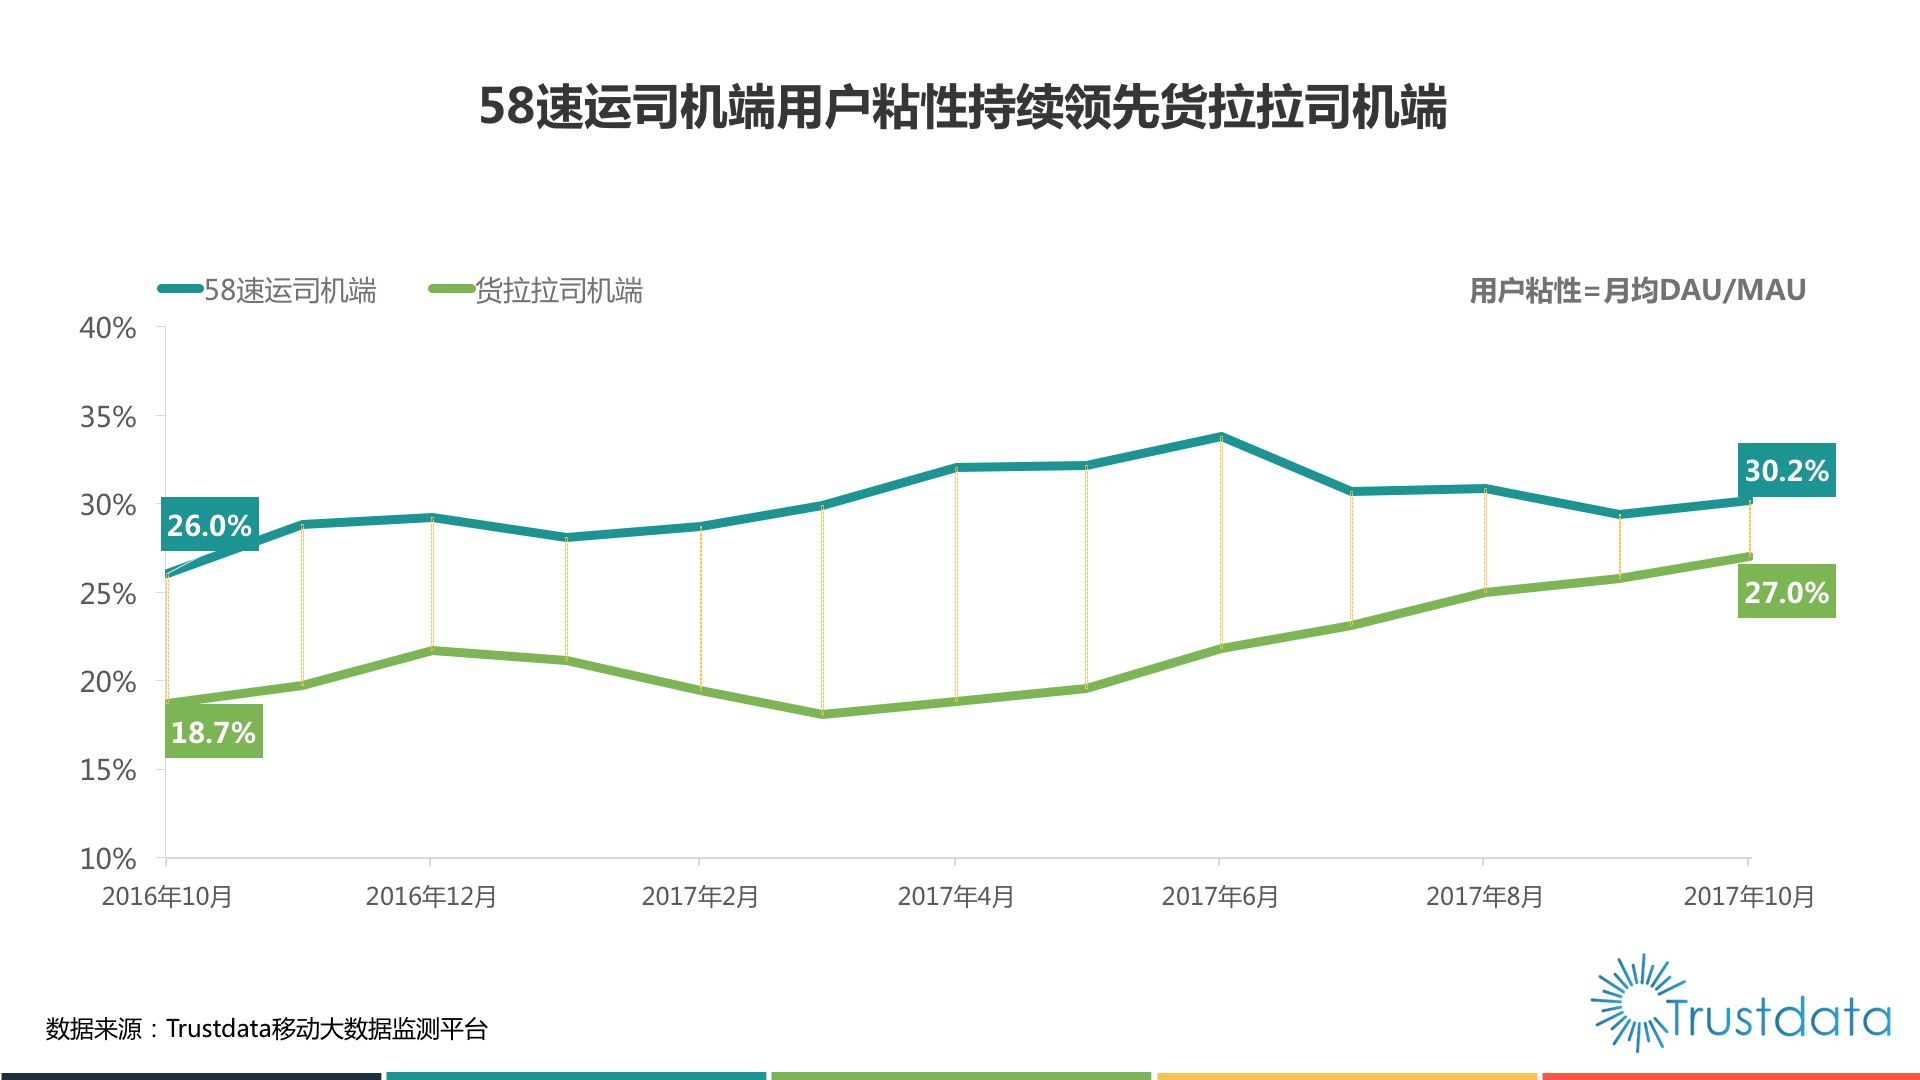 Trustdata：2017年中国共享货运行业发展分析报告